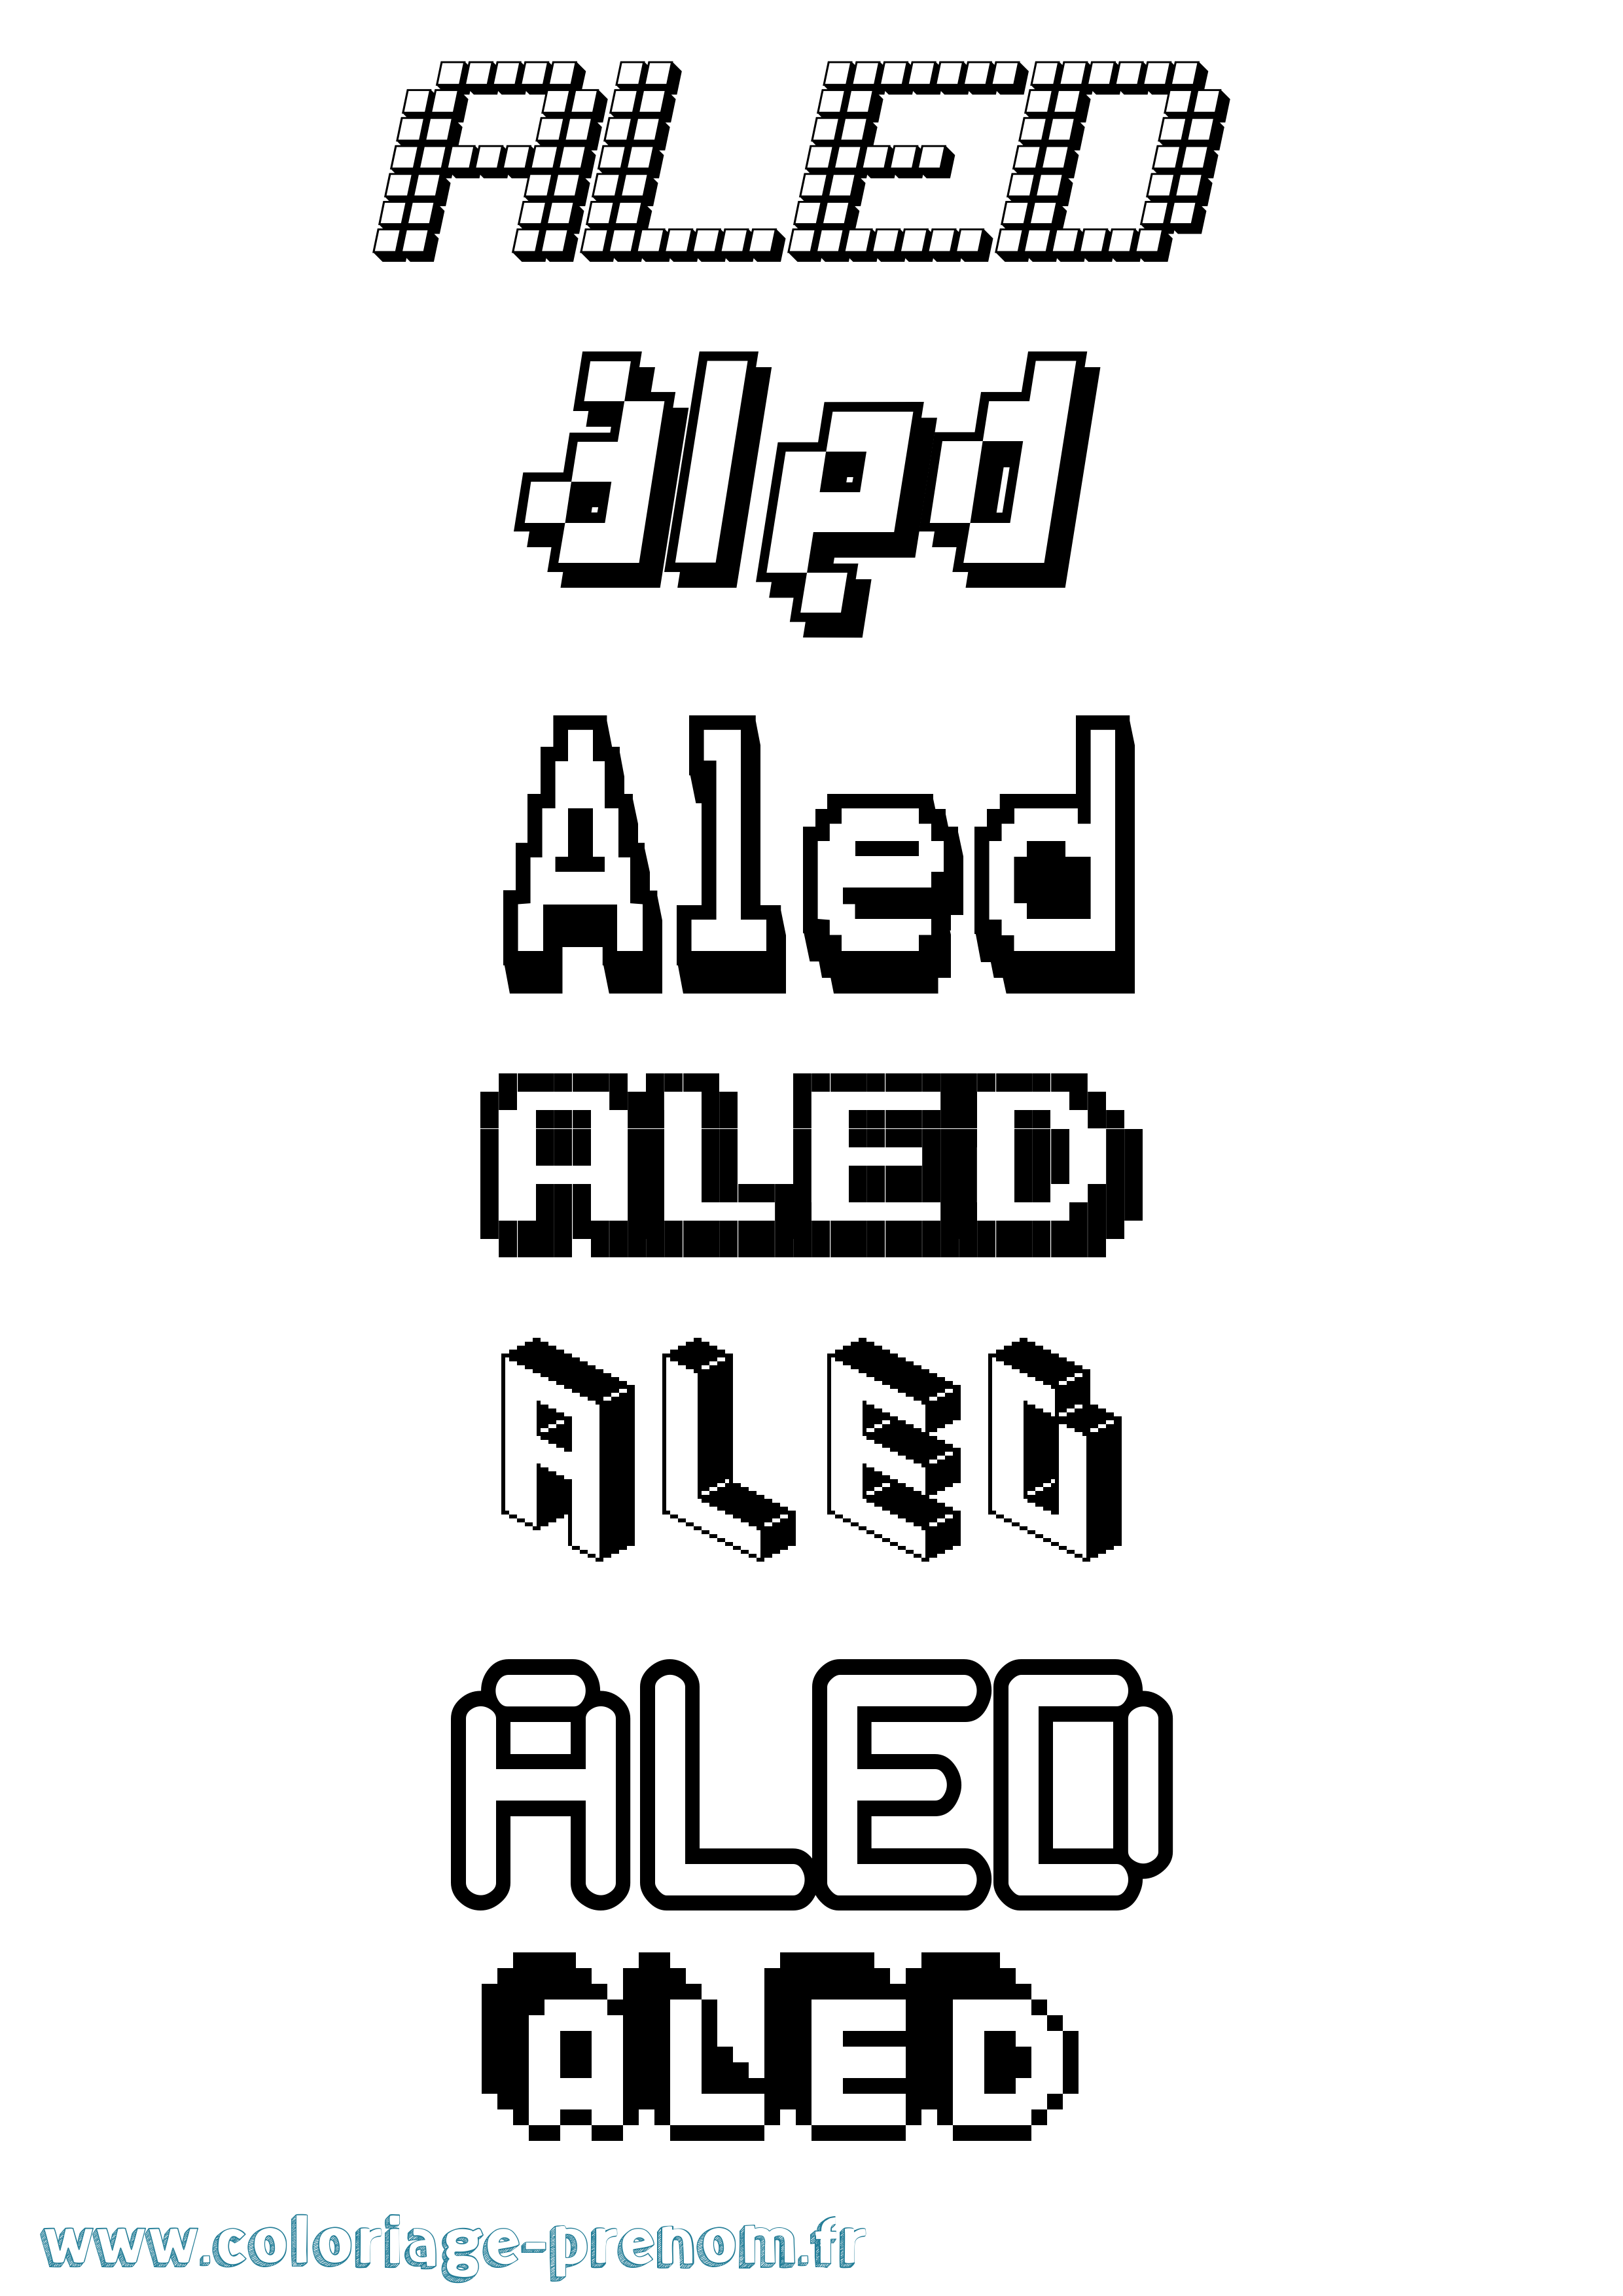 Coloriage prénom Aled Pixel